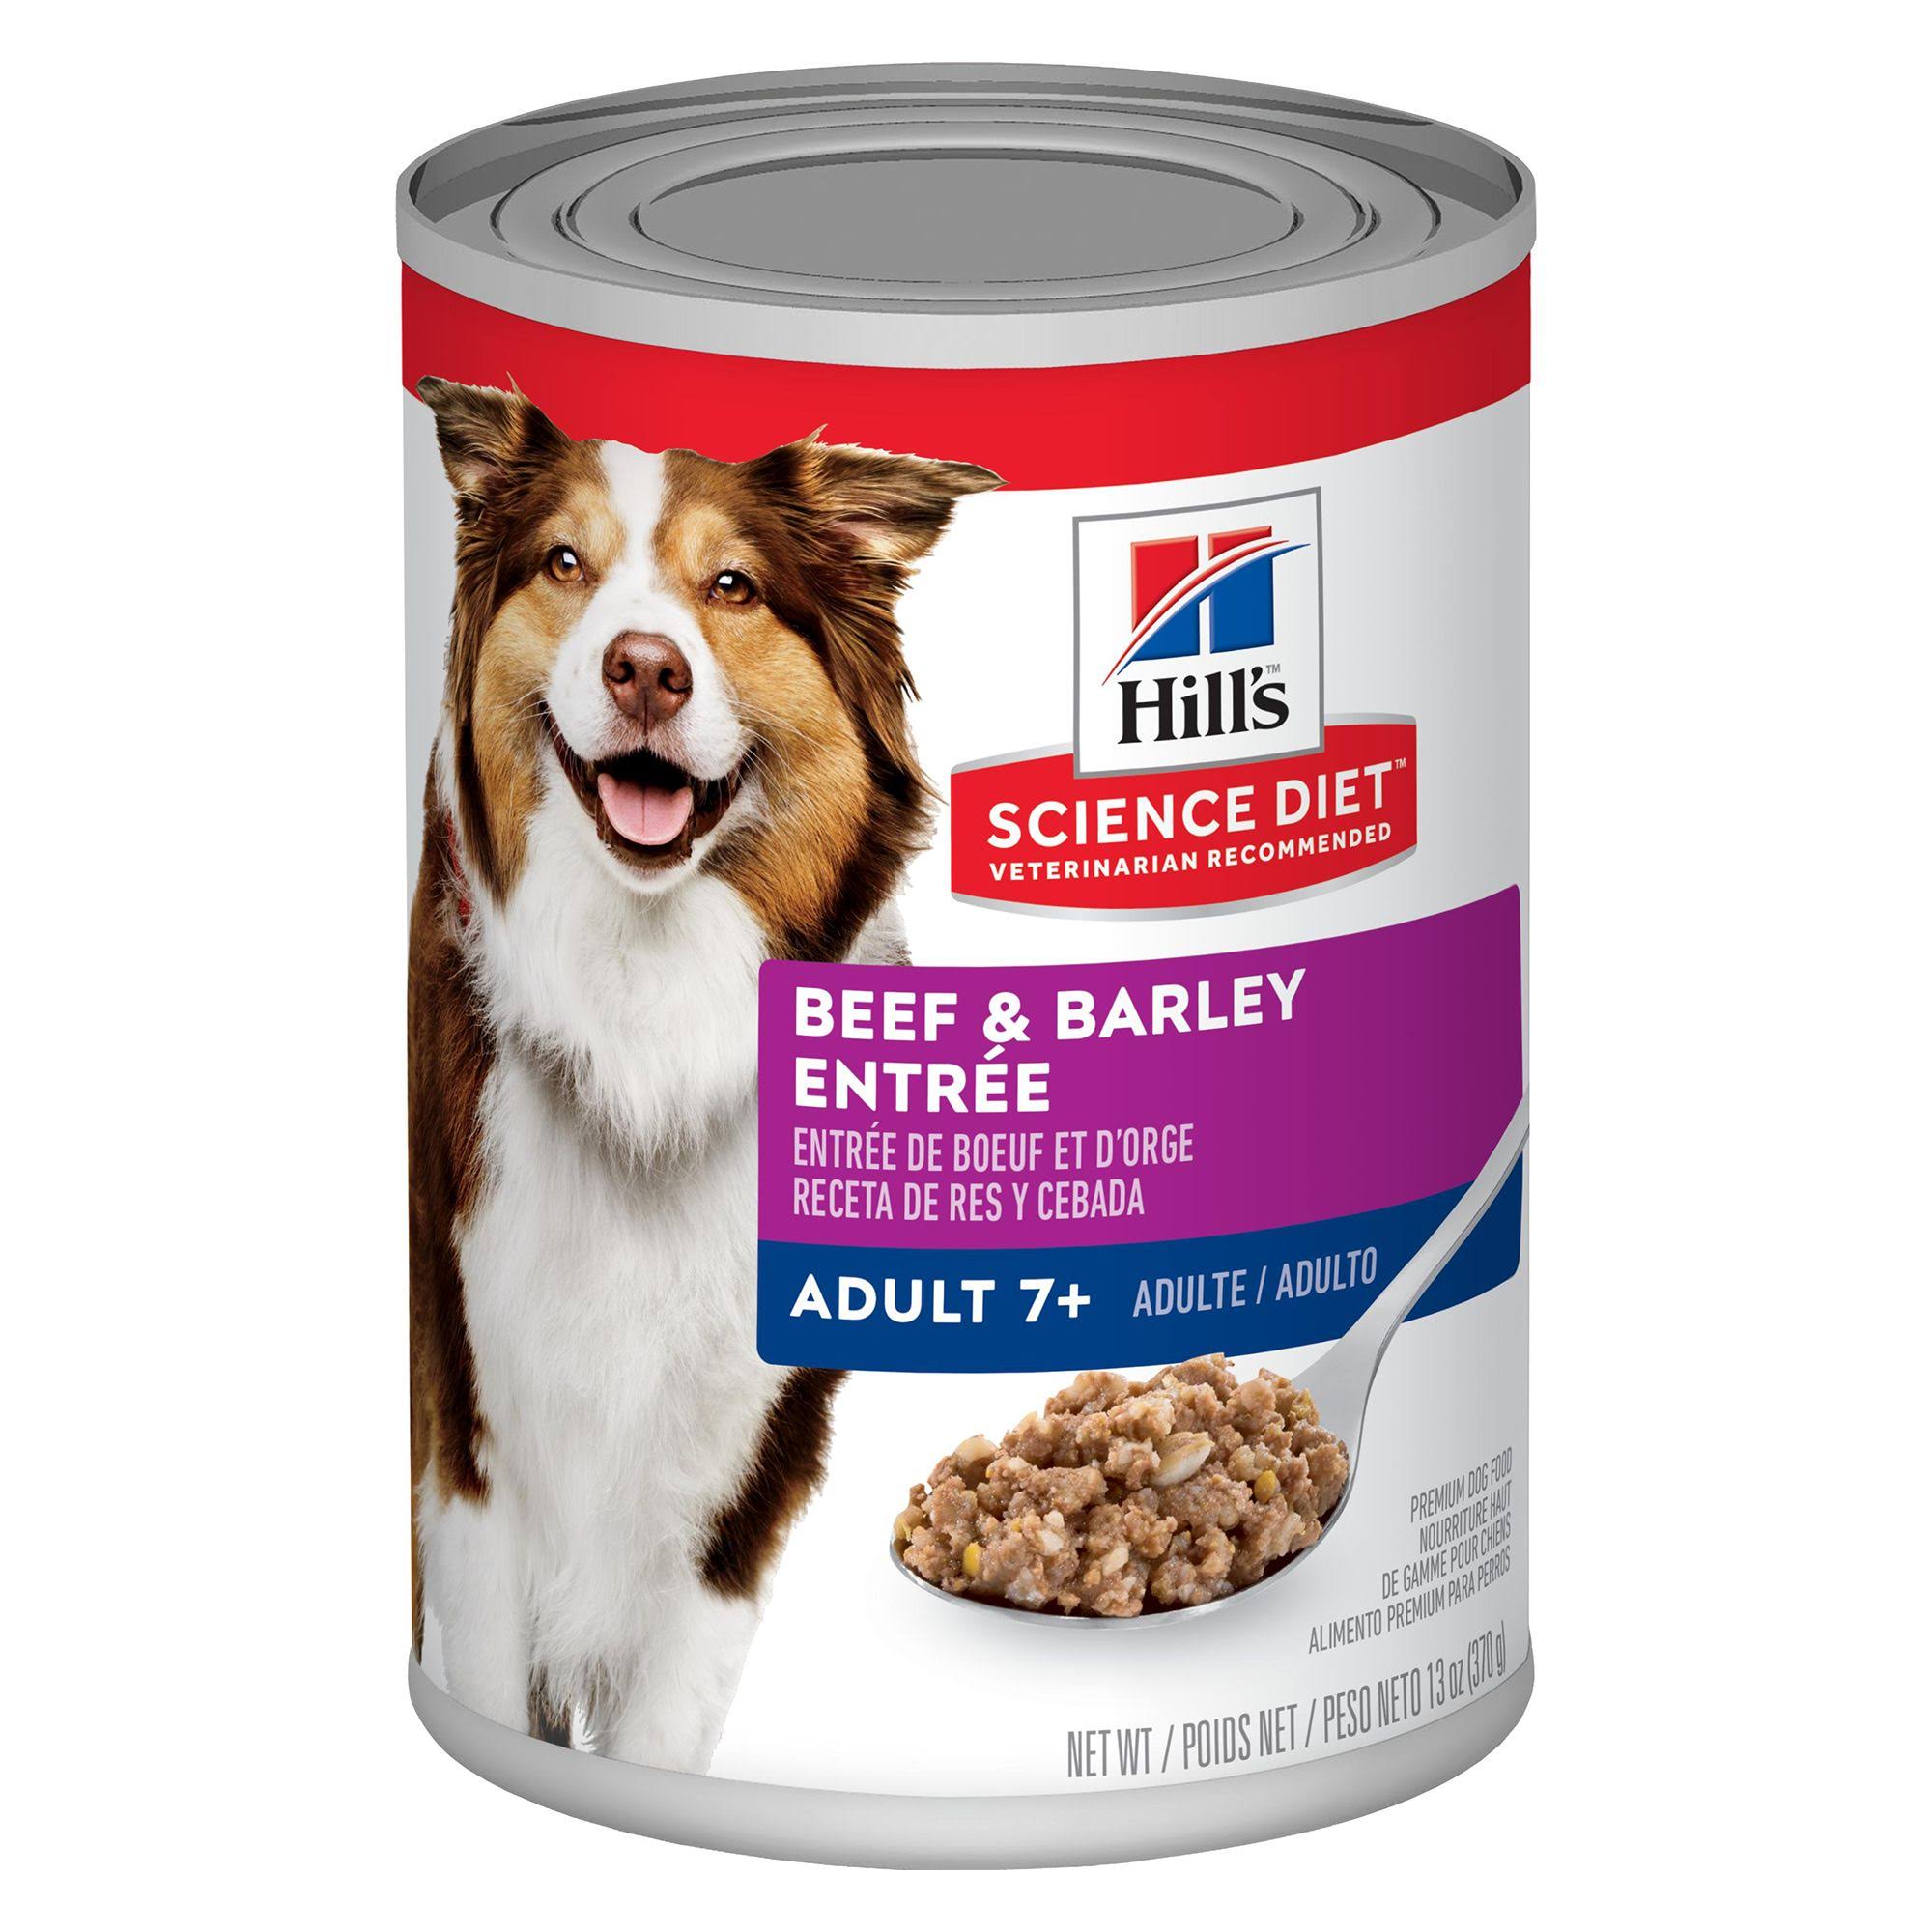 Hill's Science Diet Beef & Barley Entrée Ground Premium Dog Food Adult 7+